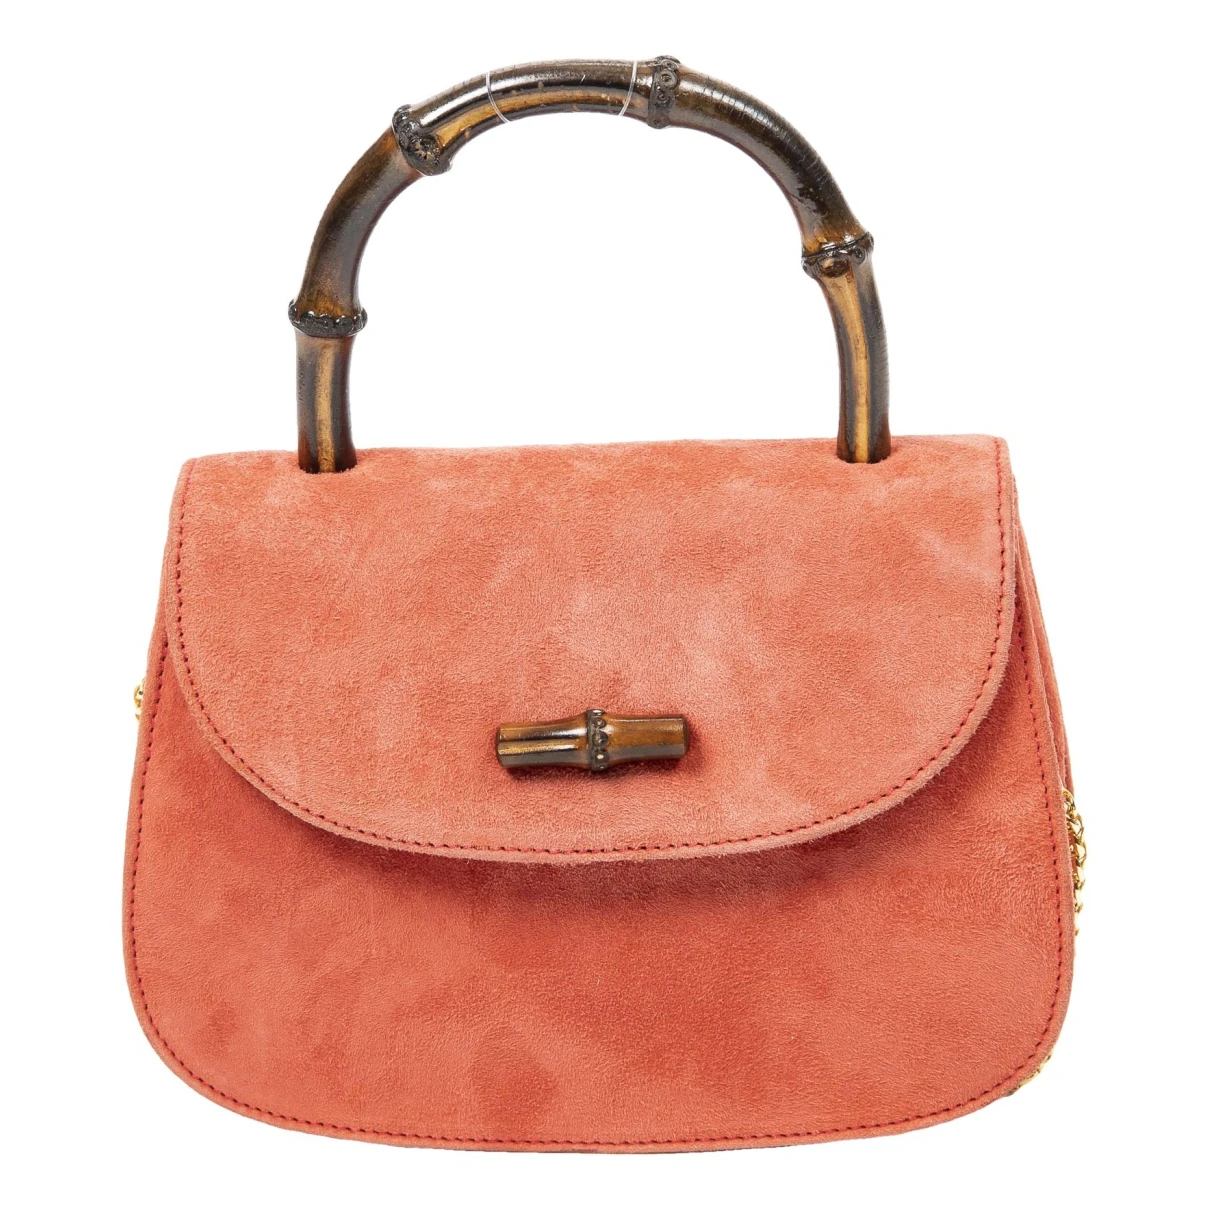 Pre-owned Gucci Leather Handbag In Orange